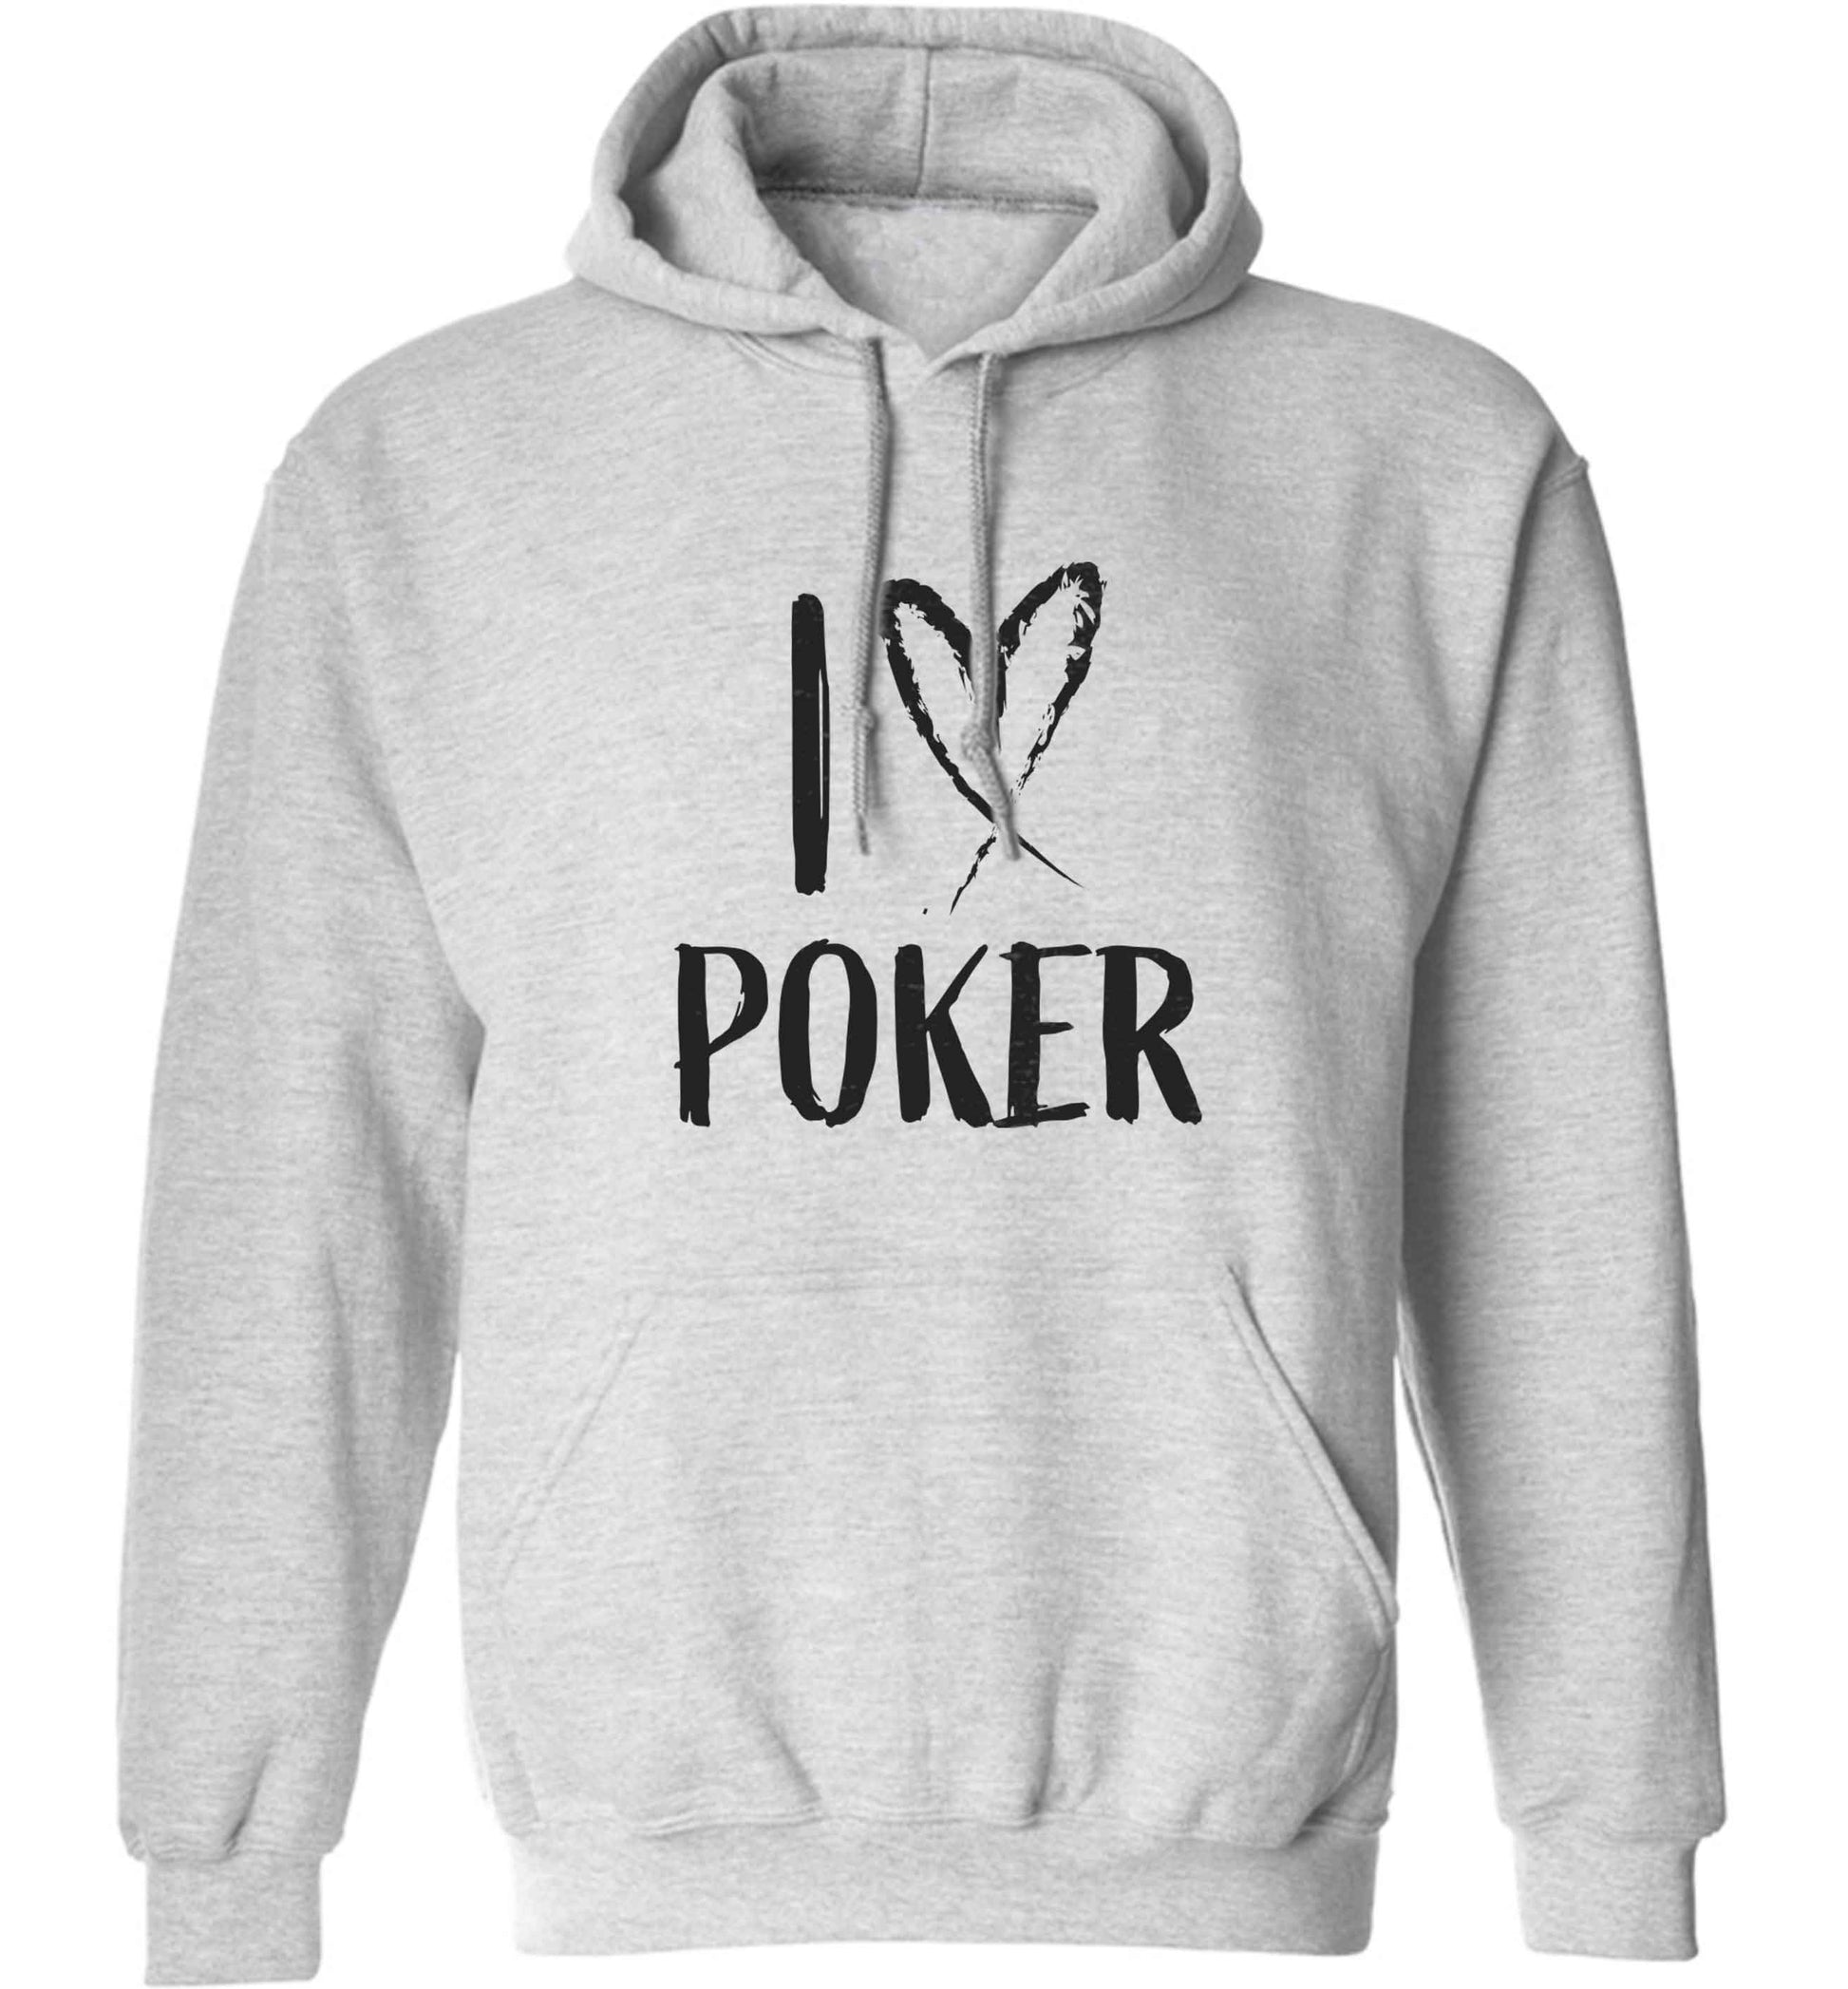 I love poker adults unisex grey hoodie 2XL